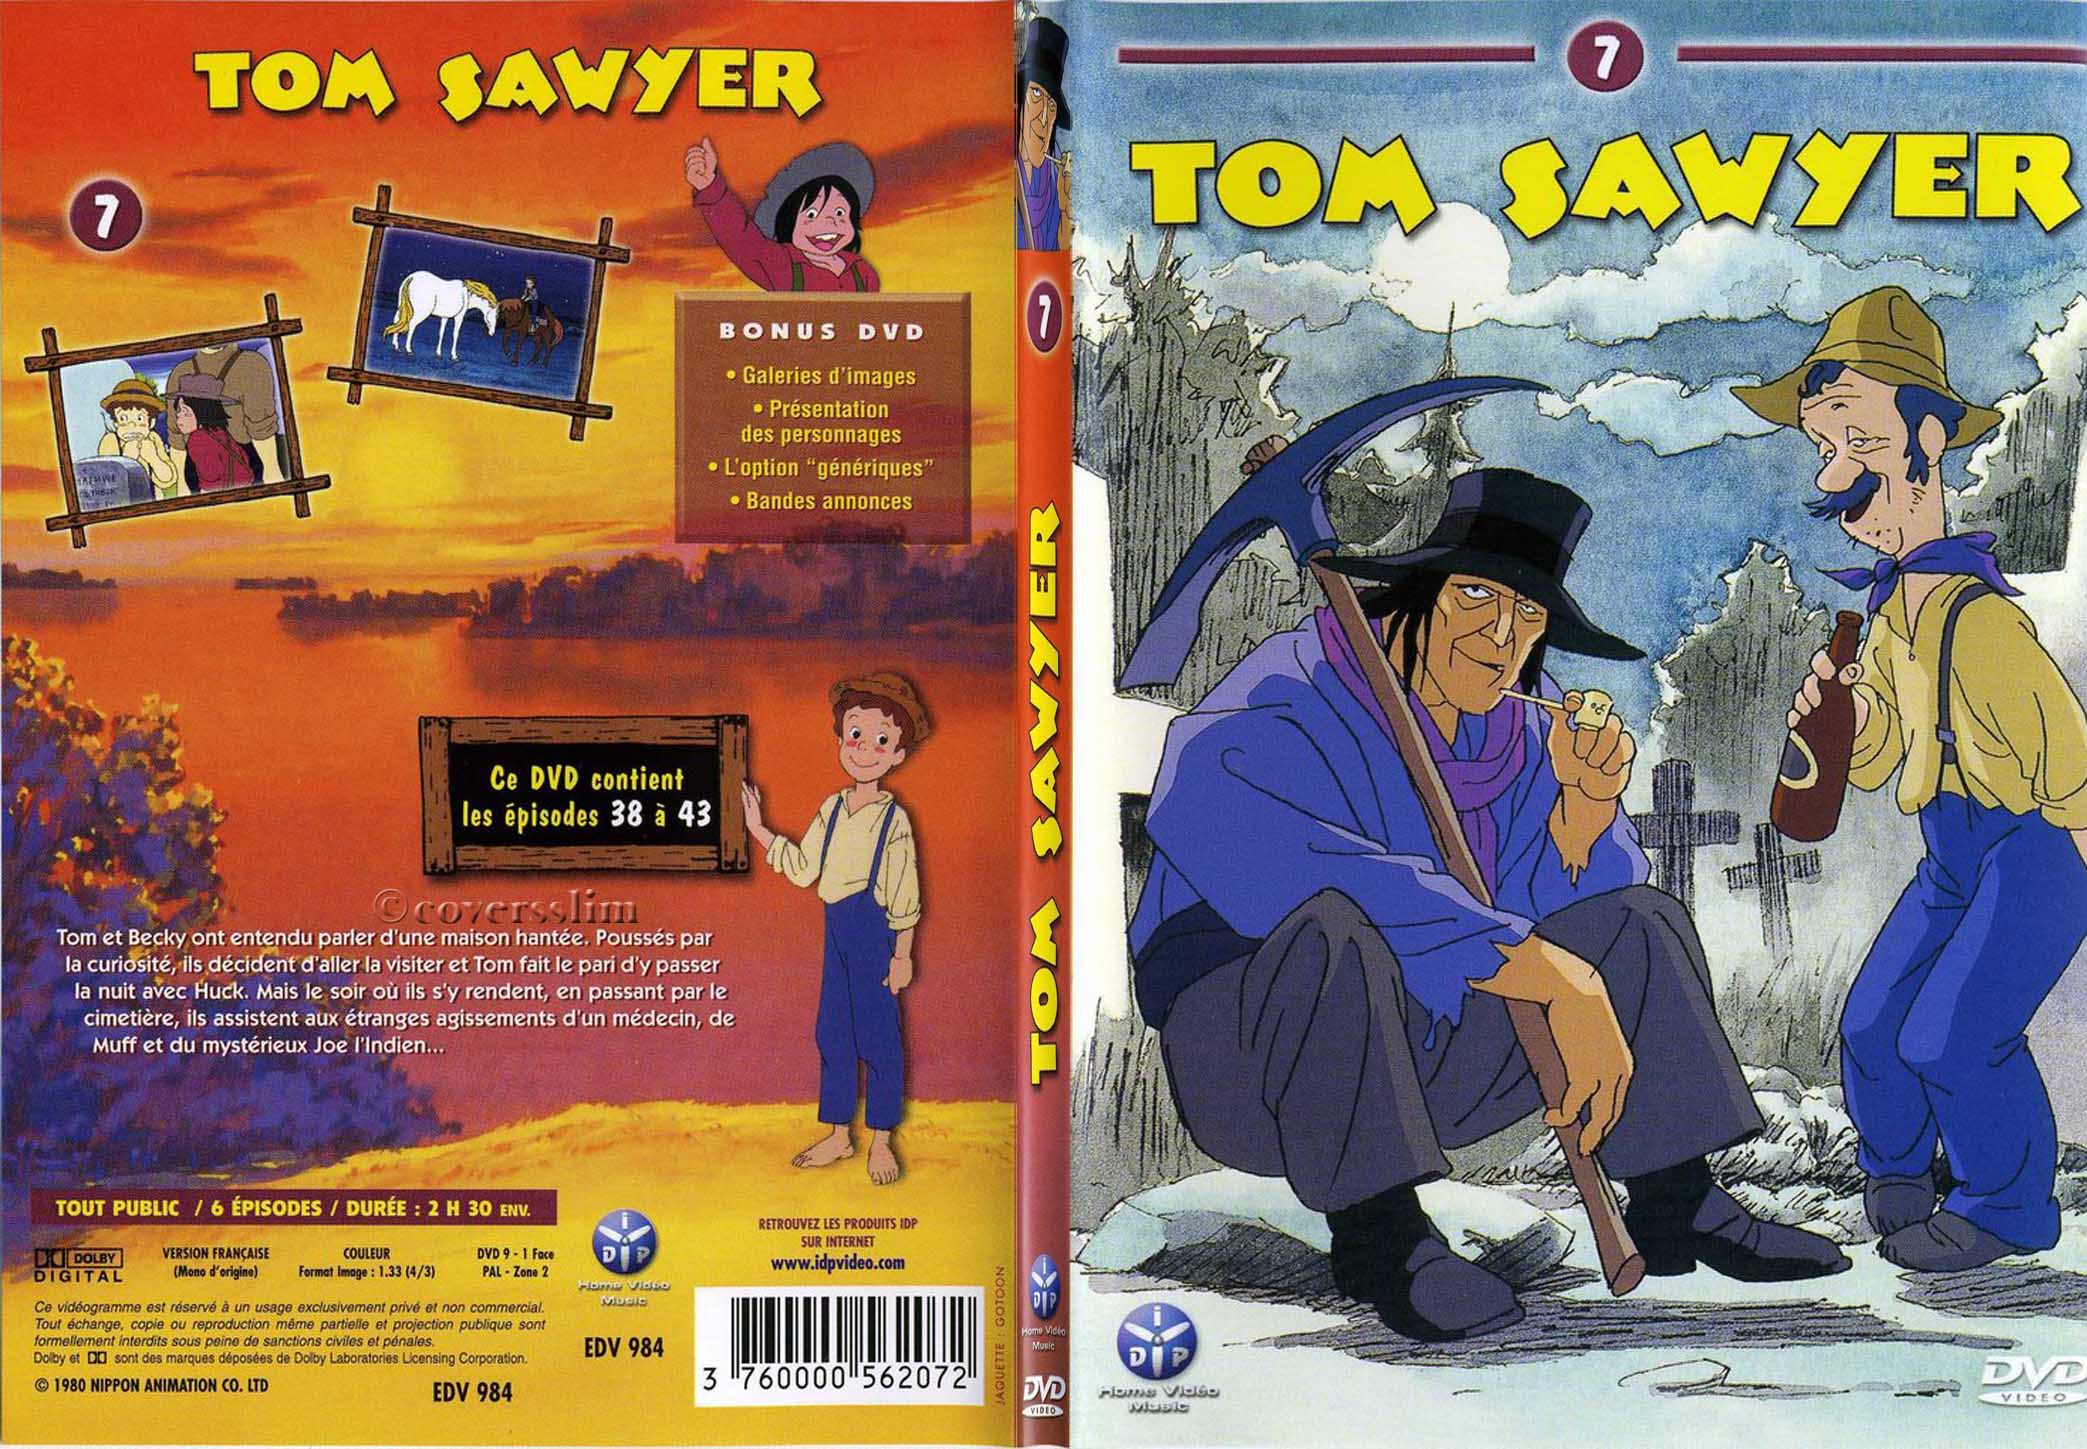 Jaquette DVD Tom Sawyer vol 7 - SLIM